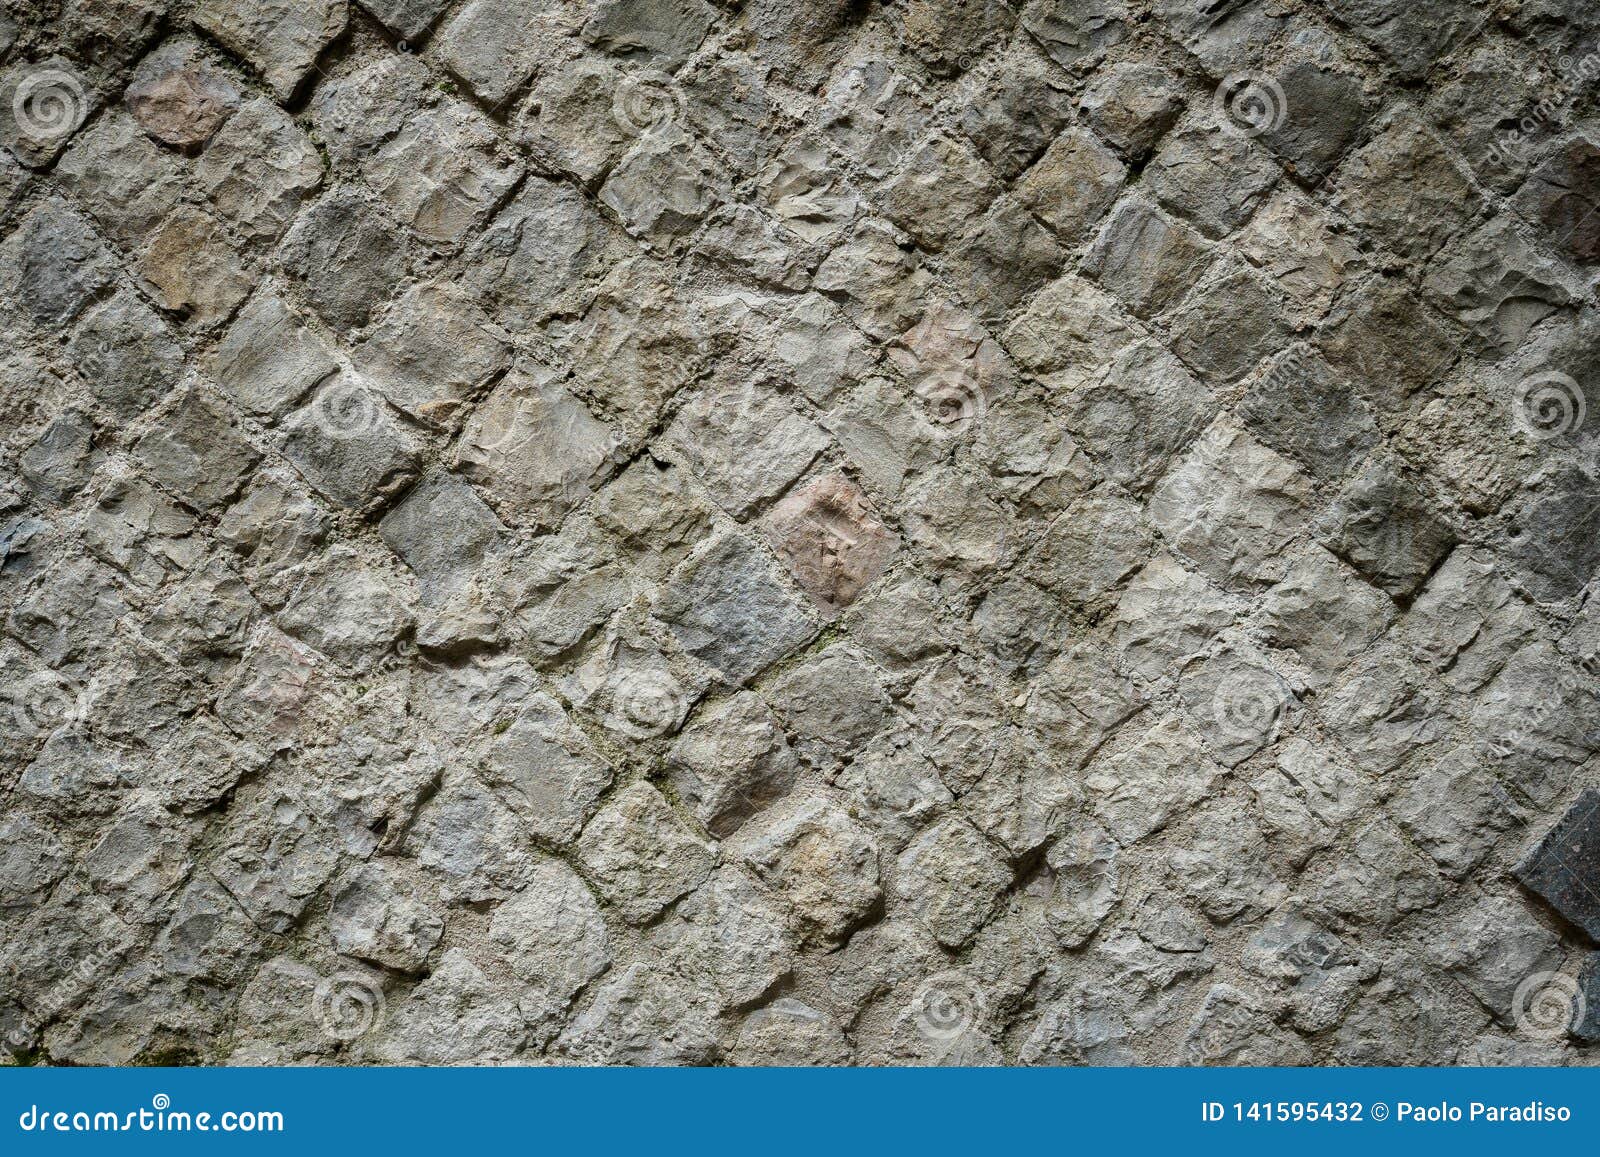 example of ancient roman opus reticulatum wall.